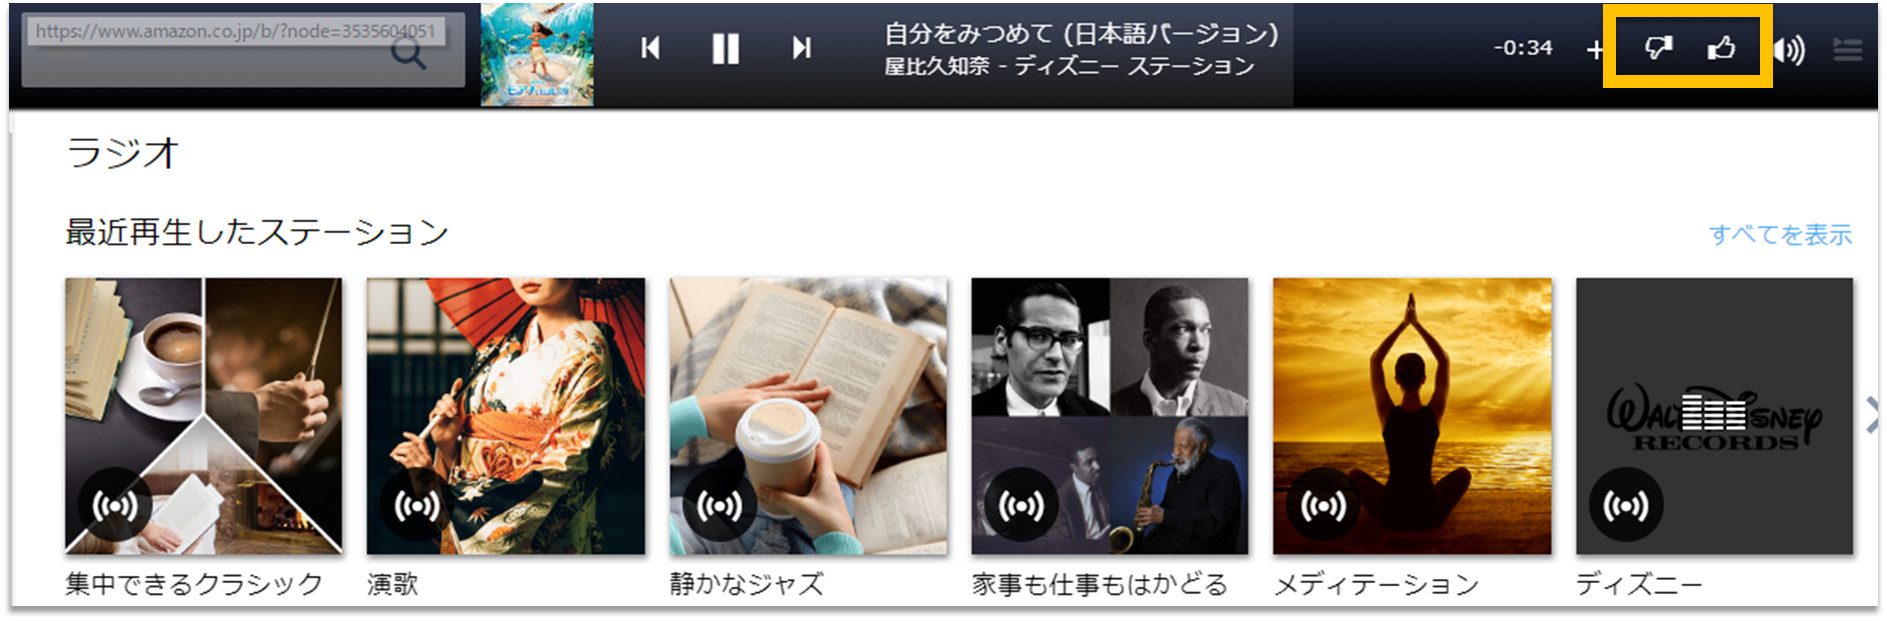 Amazon Music Web のサムアップボタンとサムダウンボタン